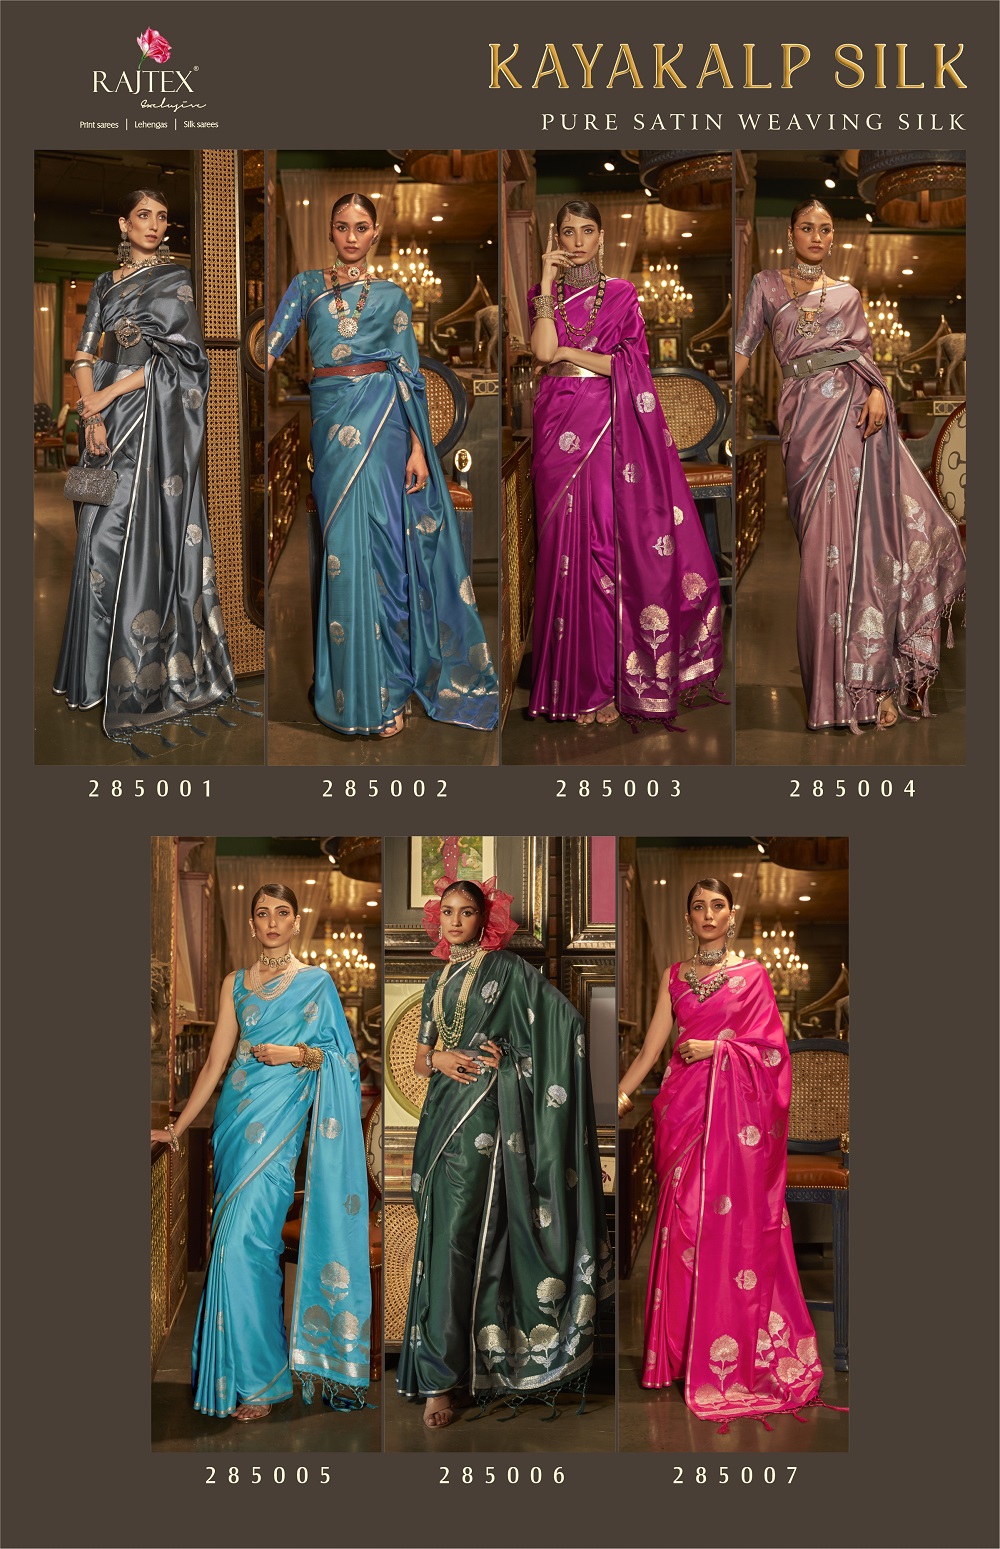 Rajtex Kayakalp Silk collection 1